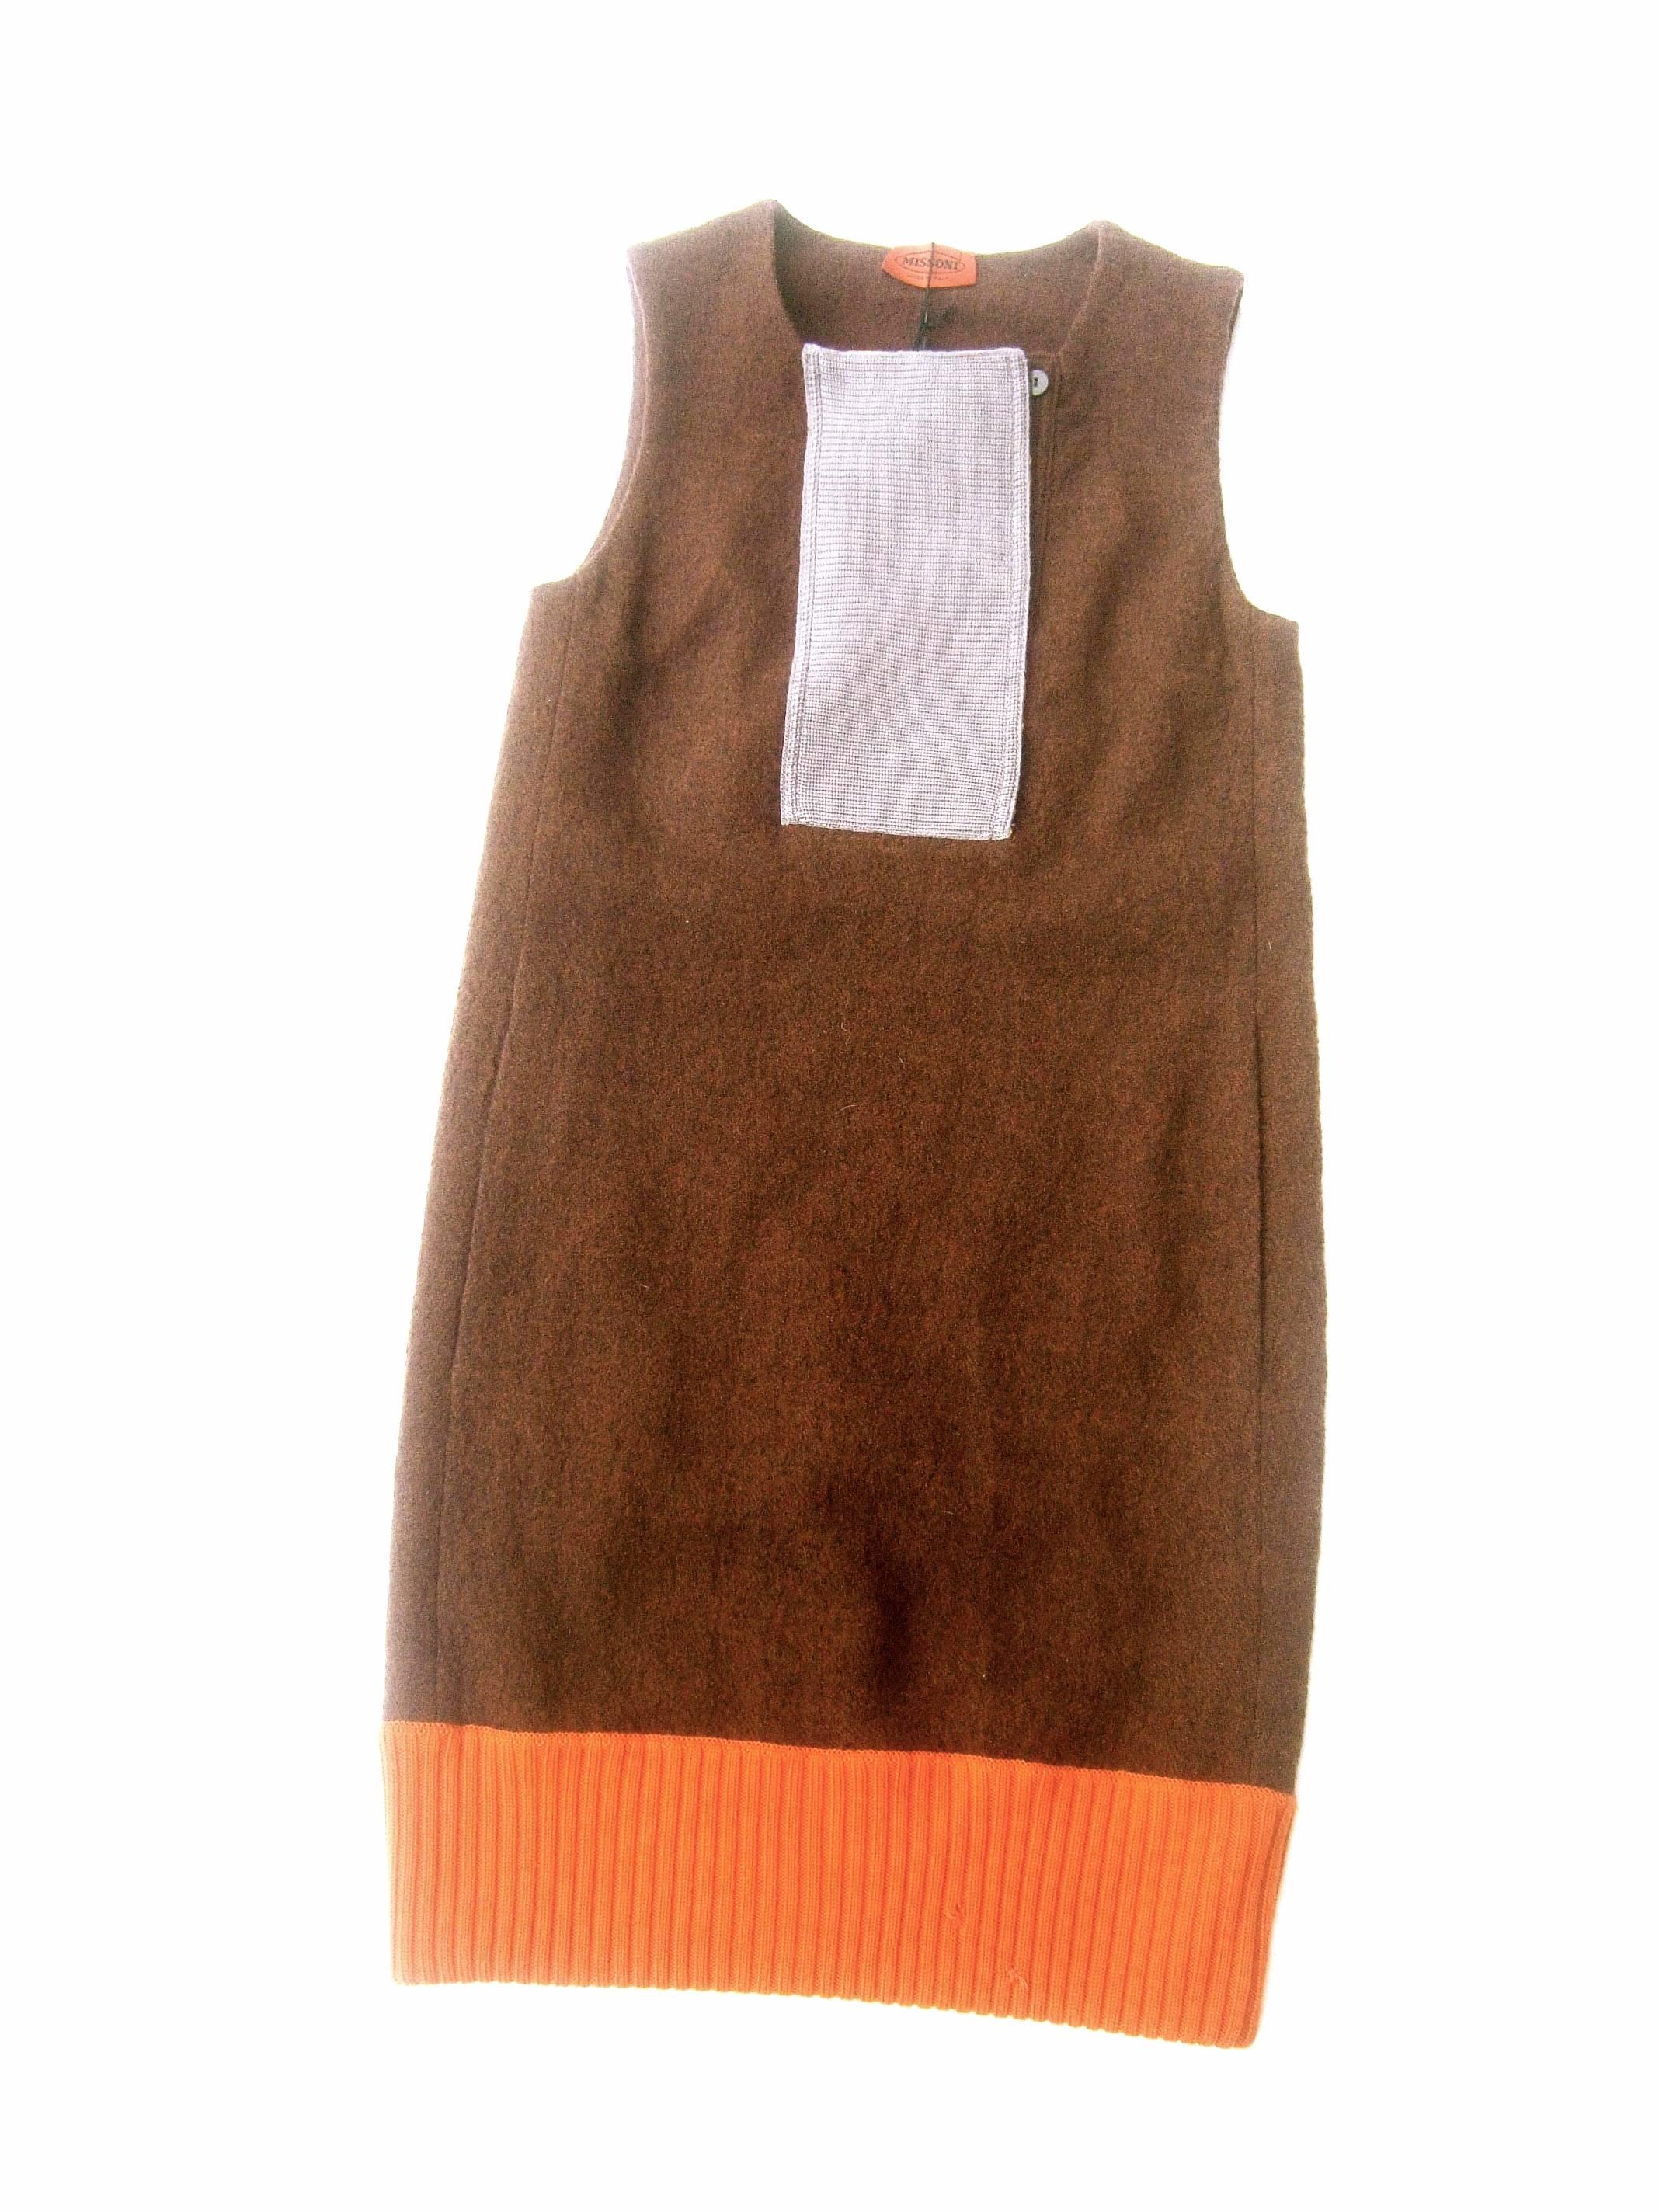 Missoni Italy Brown Wool Sleeveless Sheath Dress 21st Century  For Sale 2